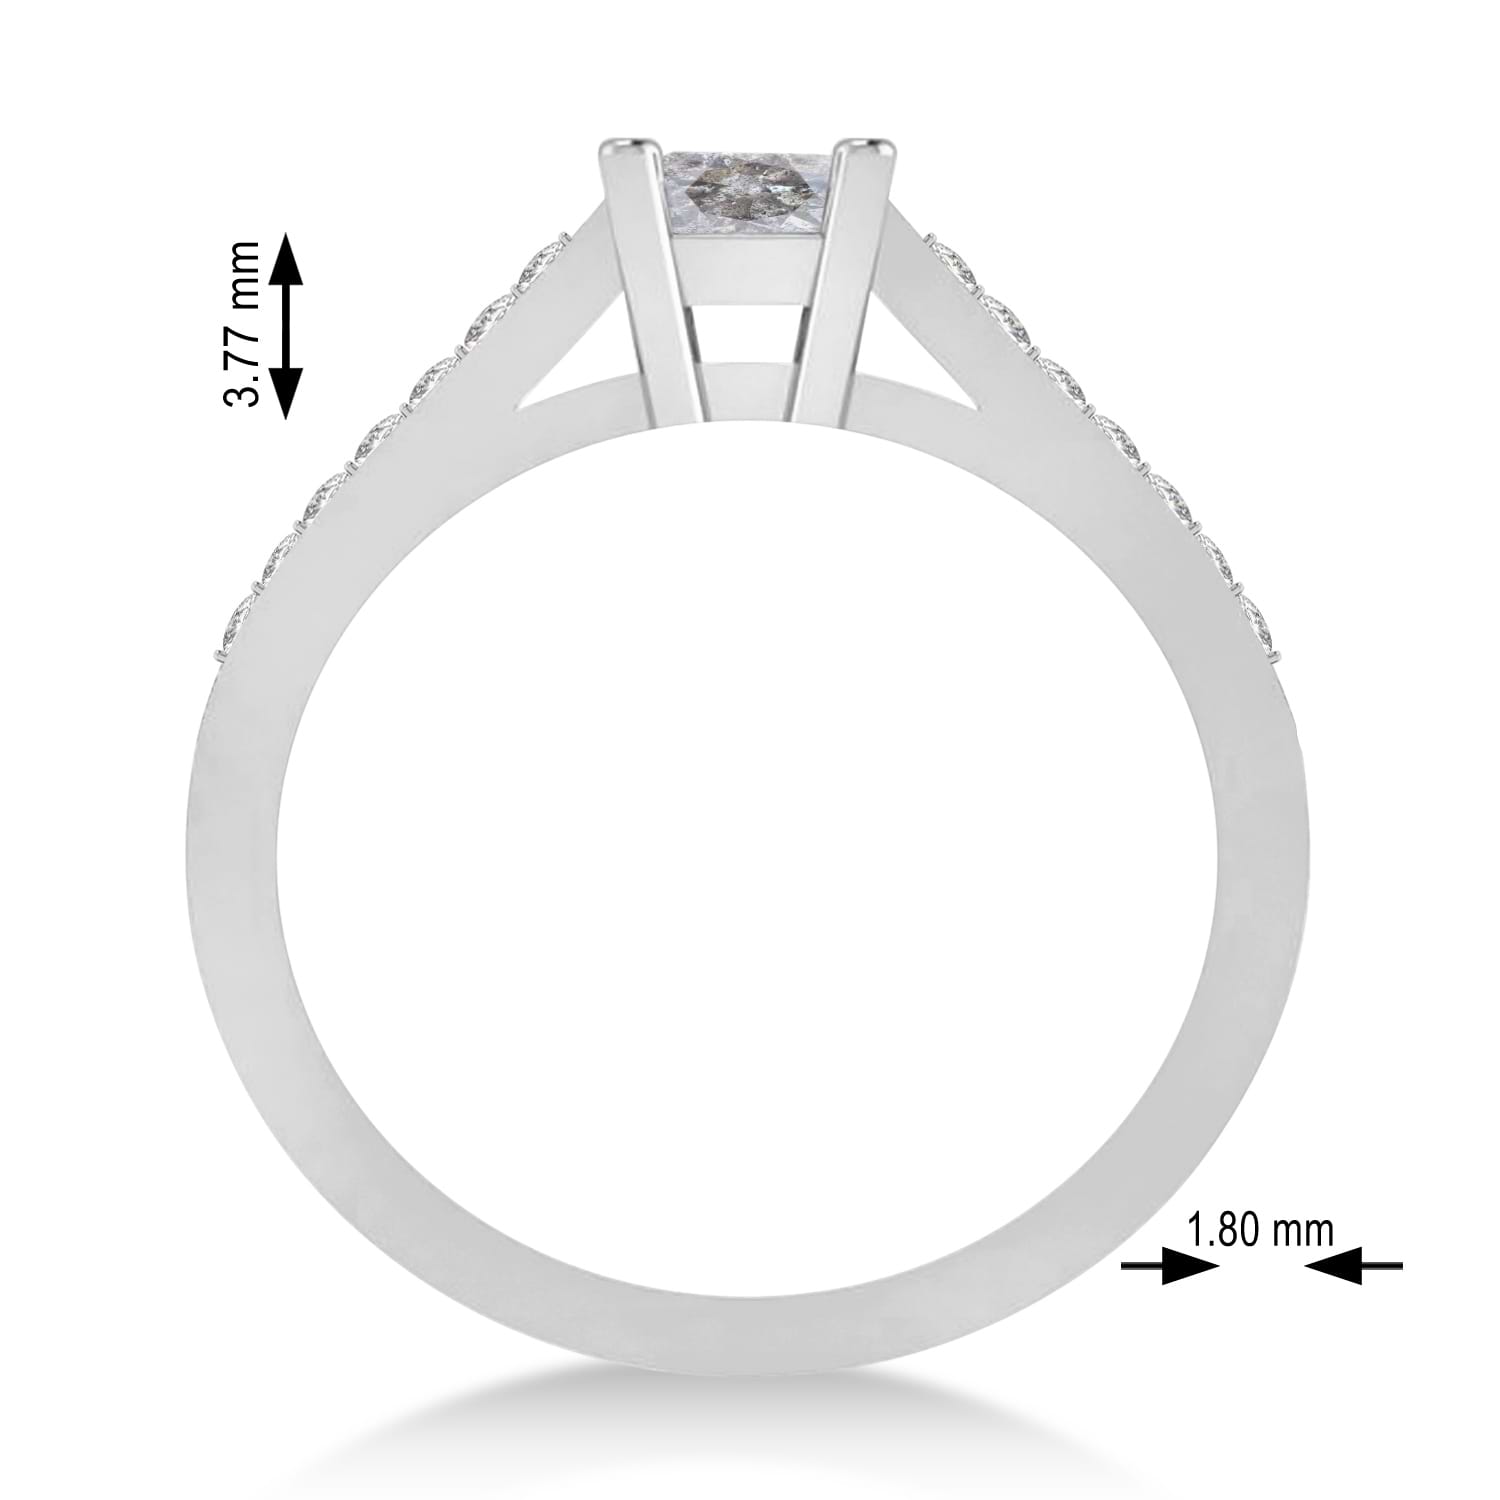 Salt & Pepper & White Emerald-Cut Diamond Pre-Set Engagement Ring 14k White Gold (1.09ct)